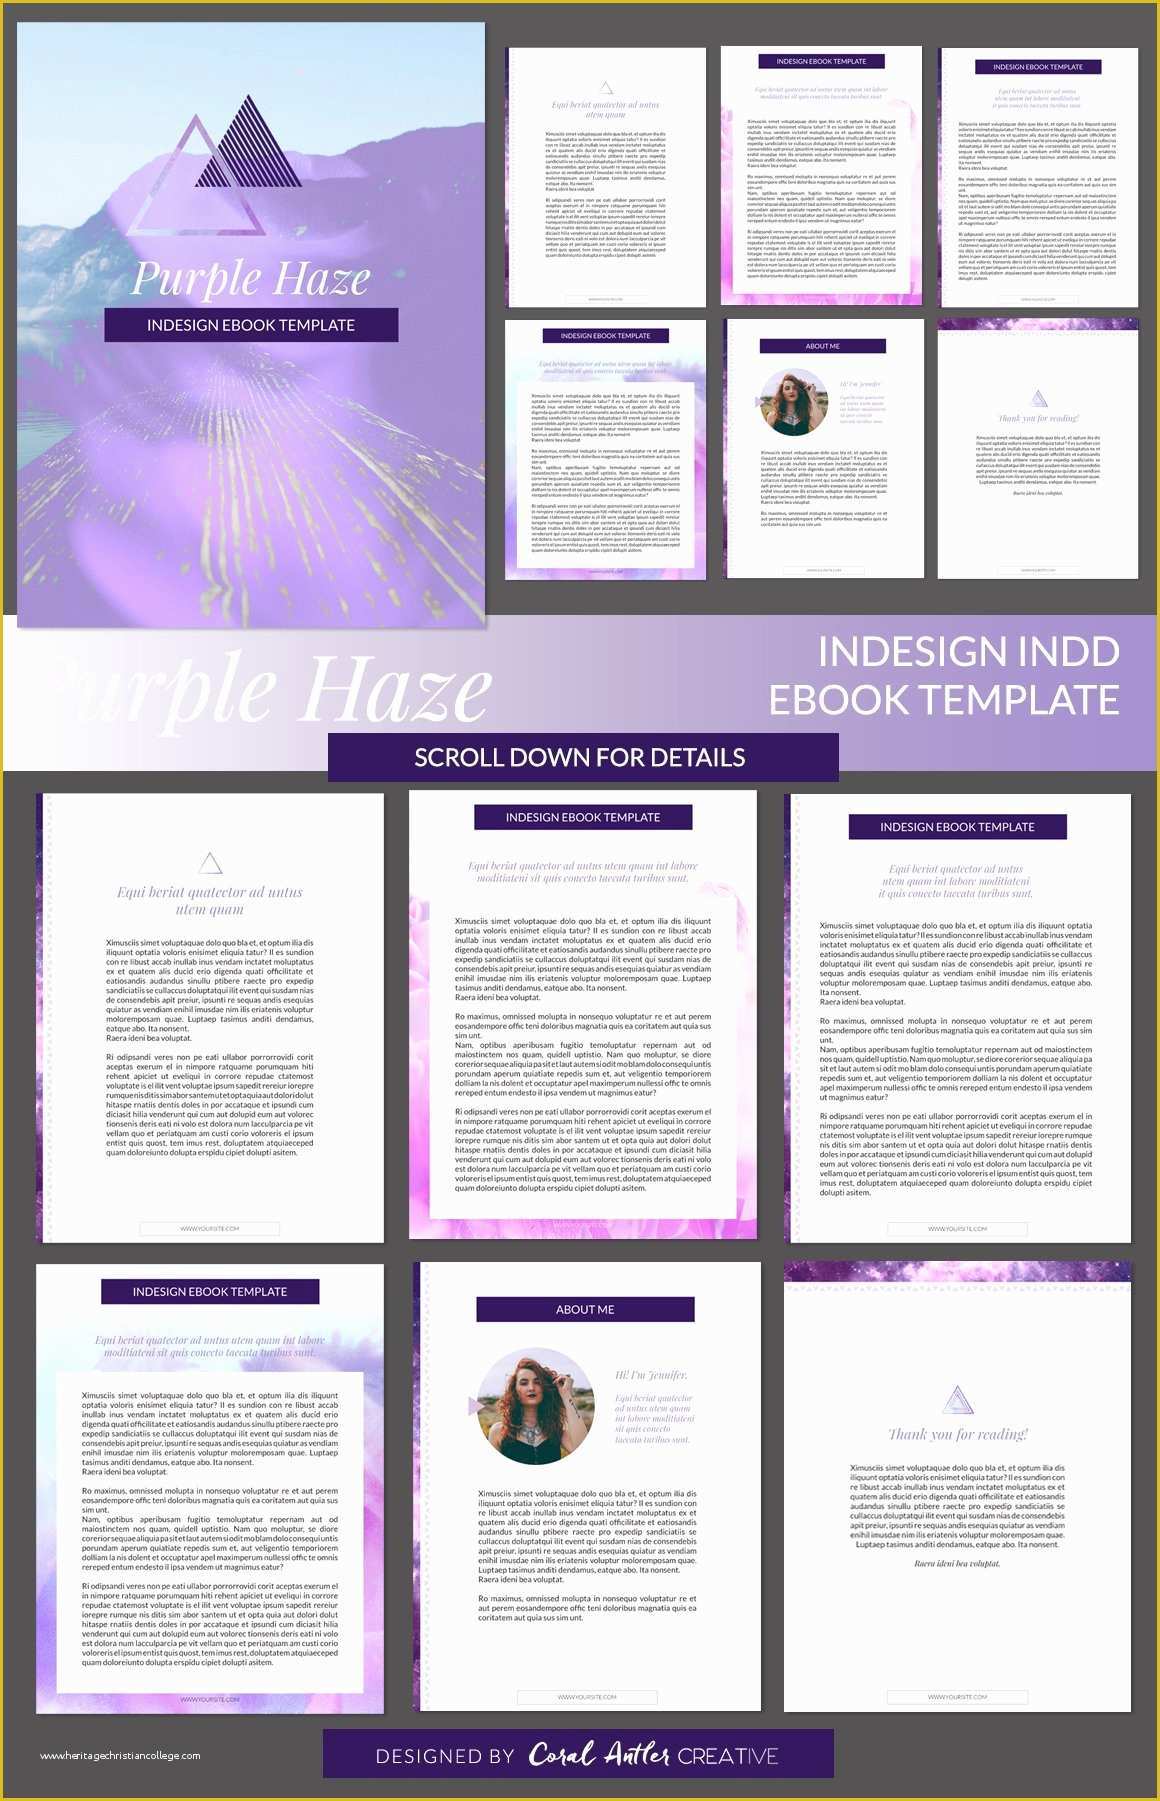 Ebook Templates Free Download Of Purple Haze Indesign Ebook Template Presentation